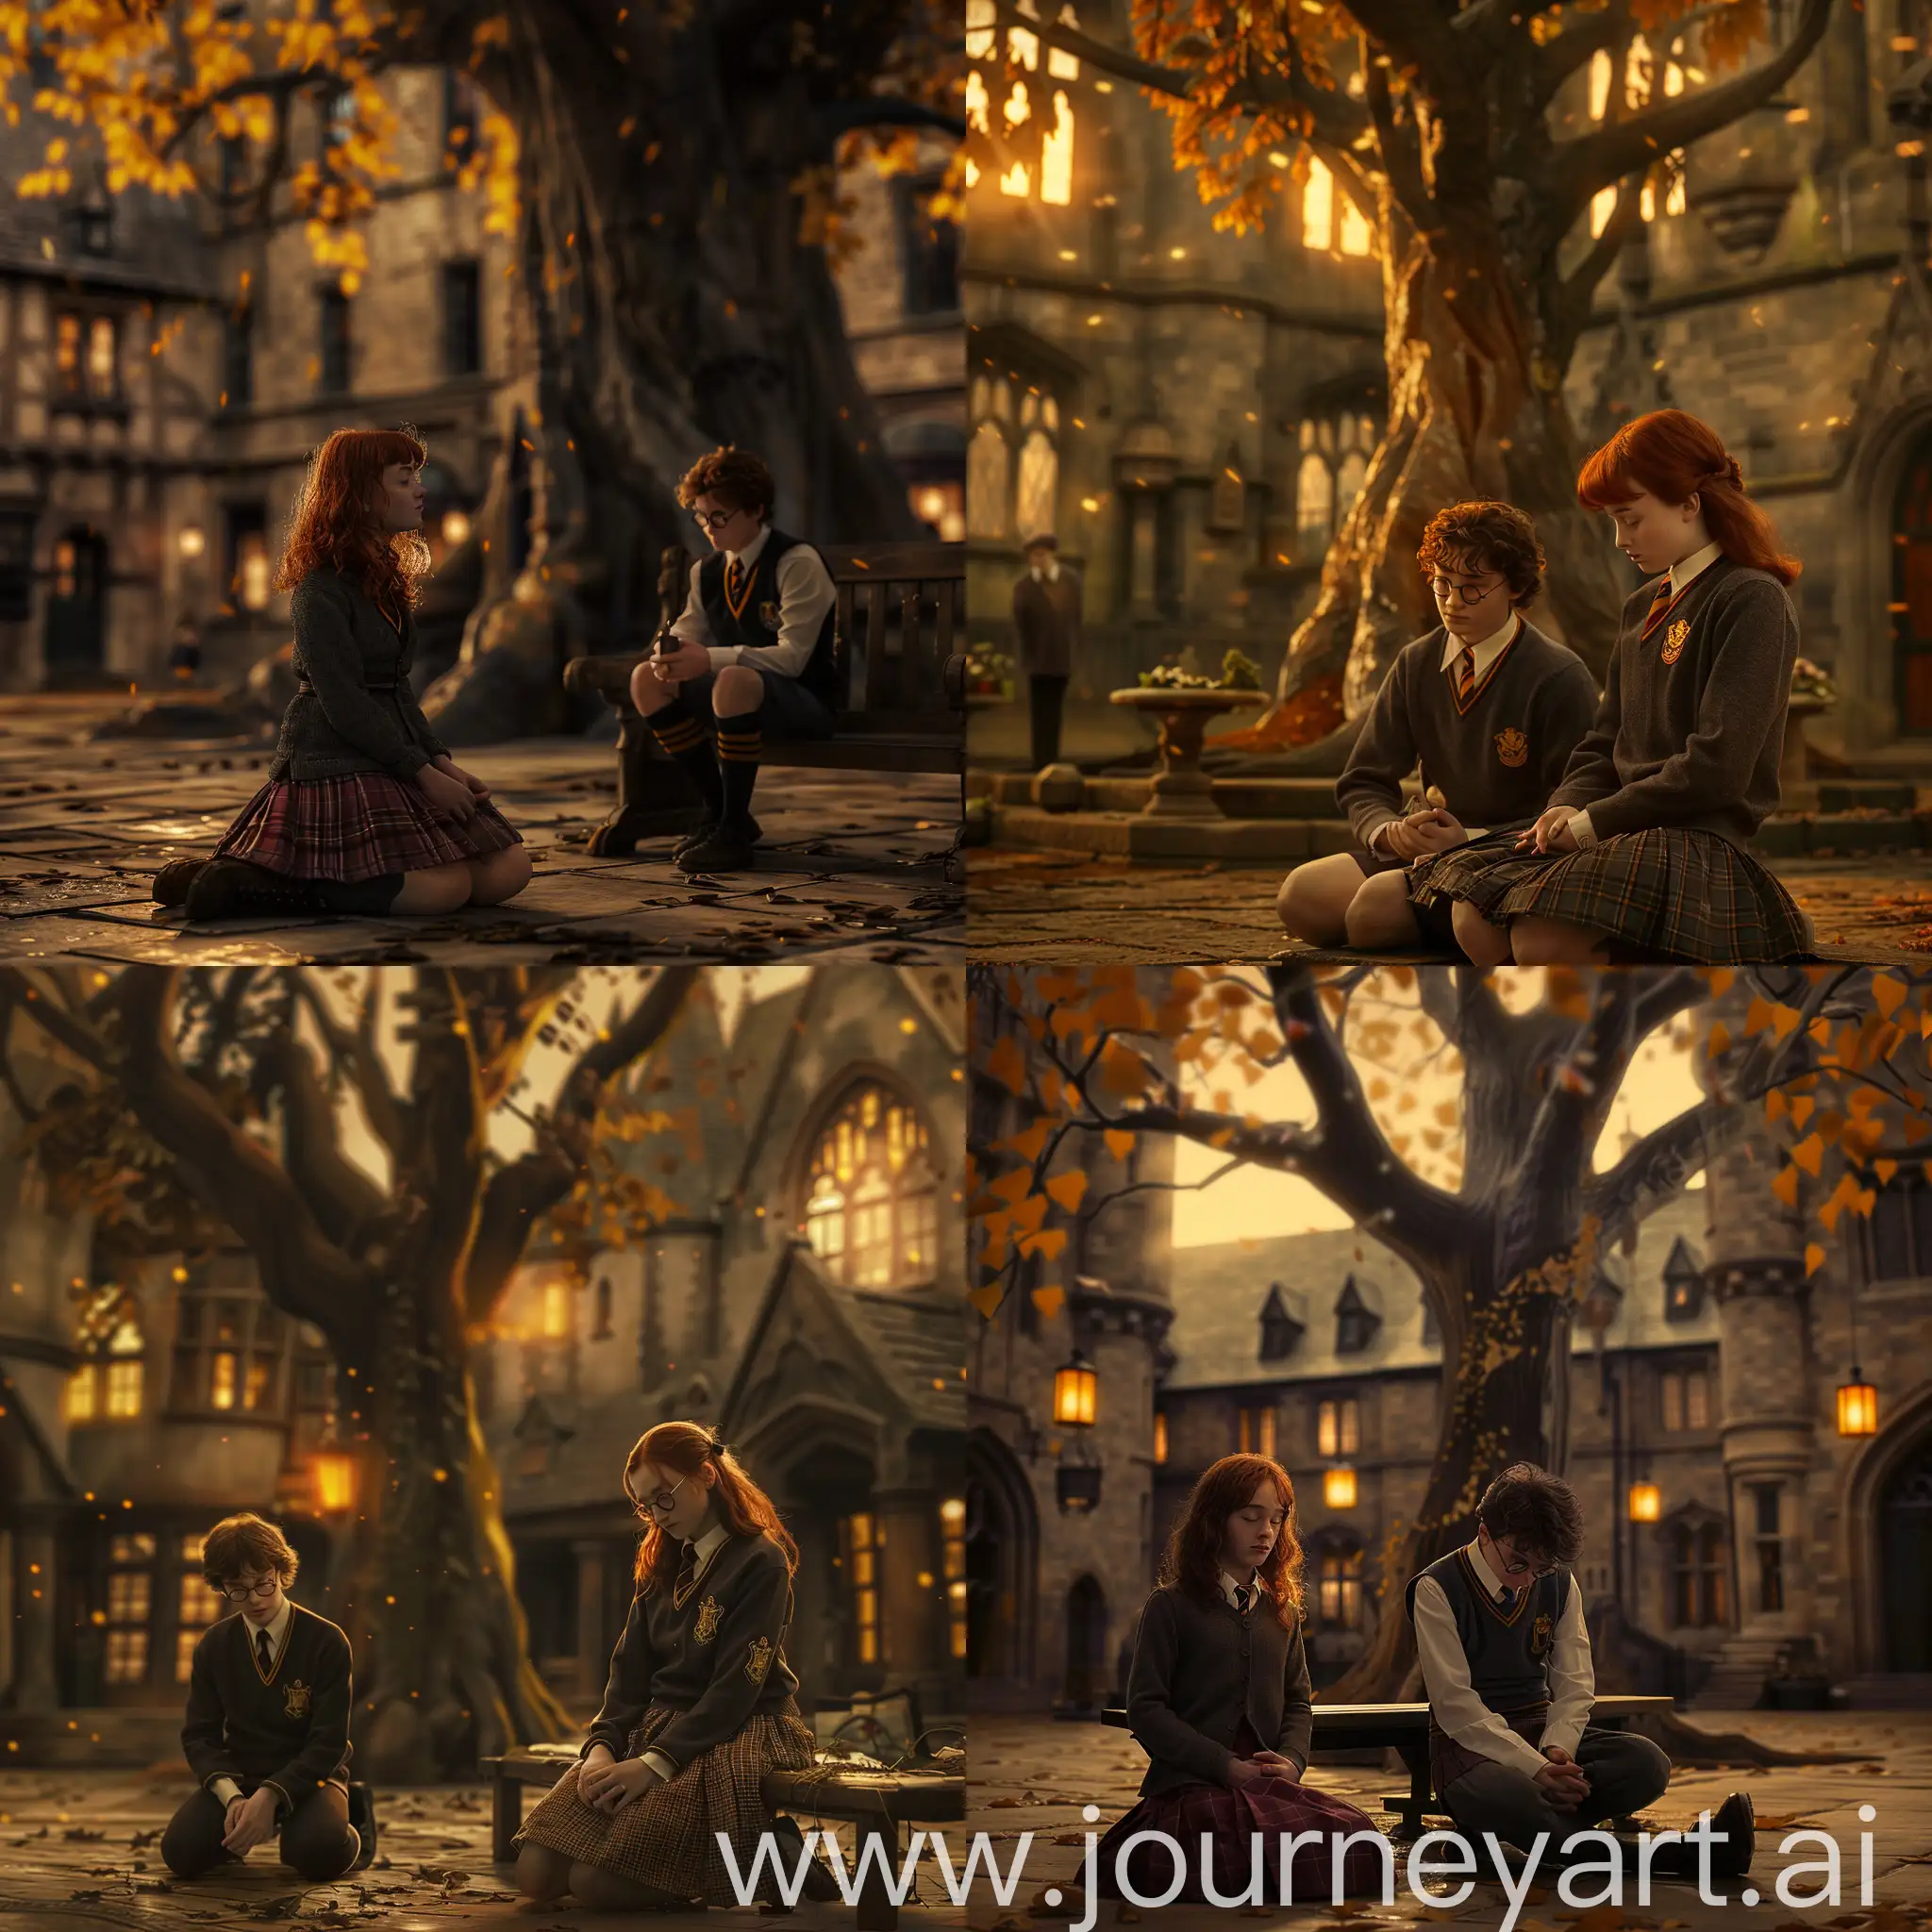 Heartfelt-Gryffindor-Moment-Emotional-Encounter-in-Hogwarts-Courtyard